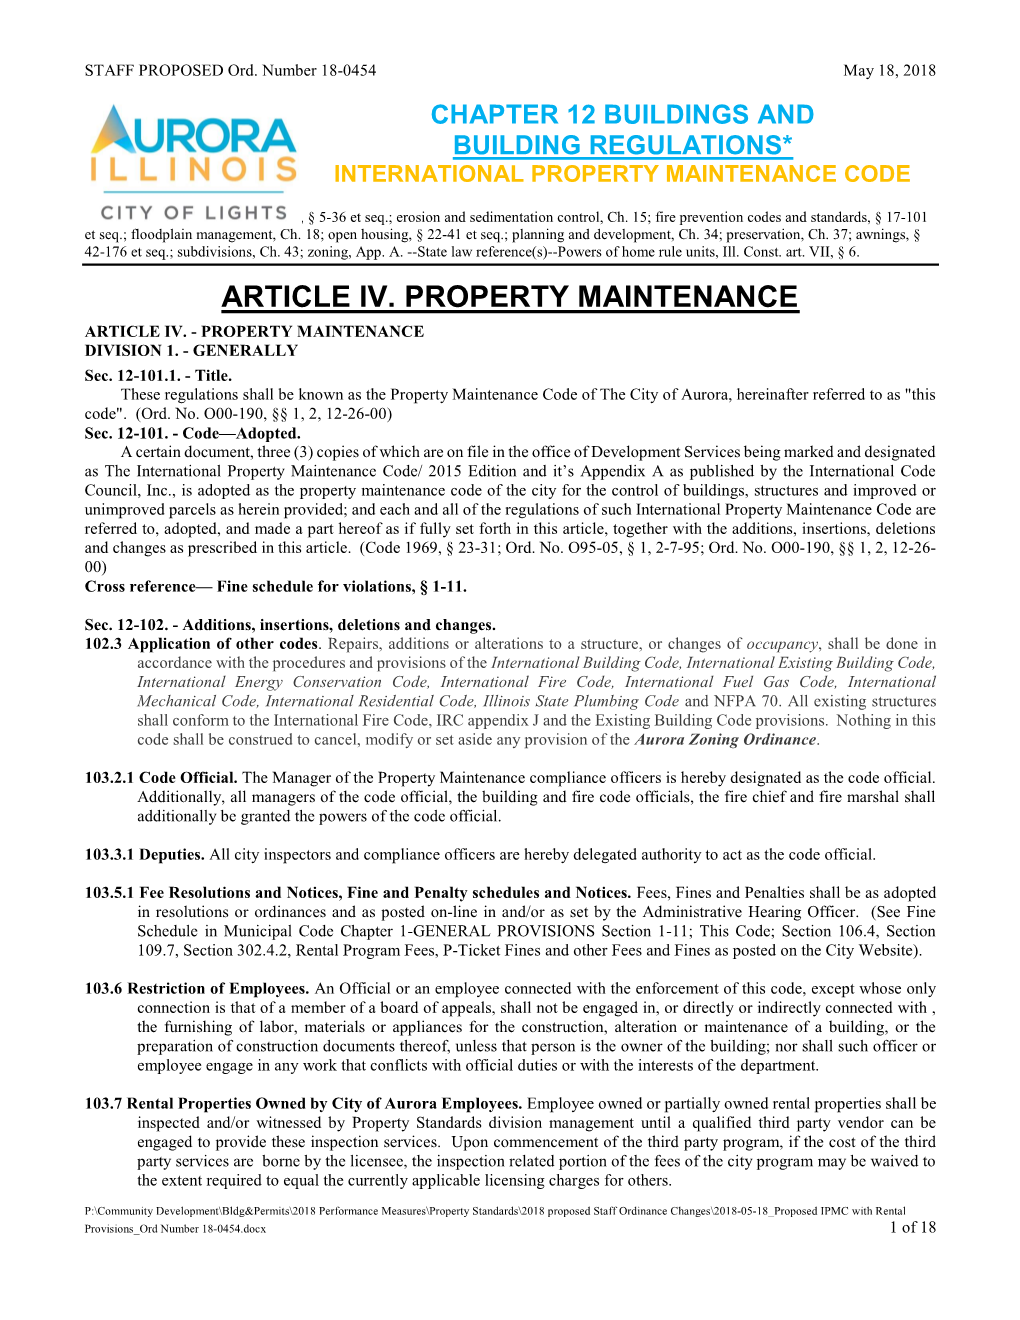 Article Iv. Property Maintenance